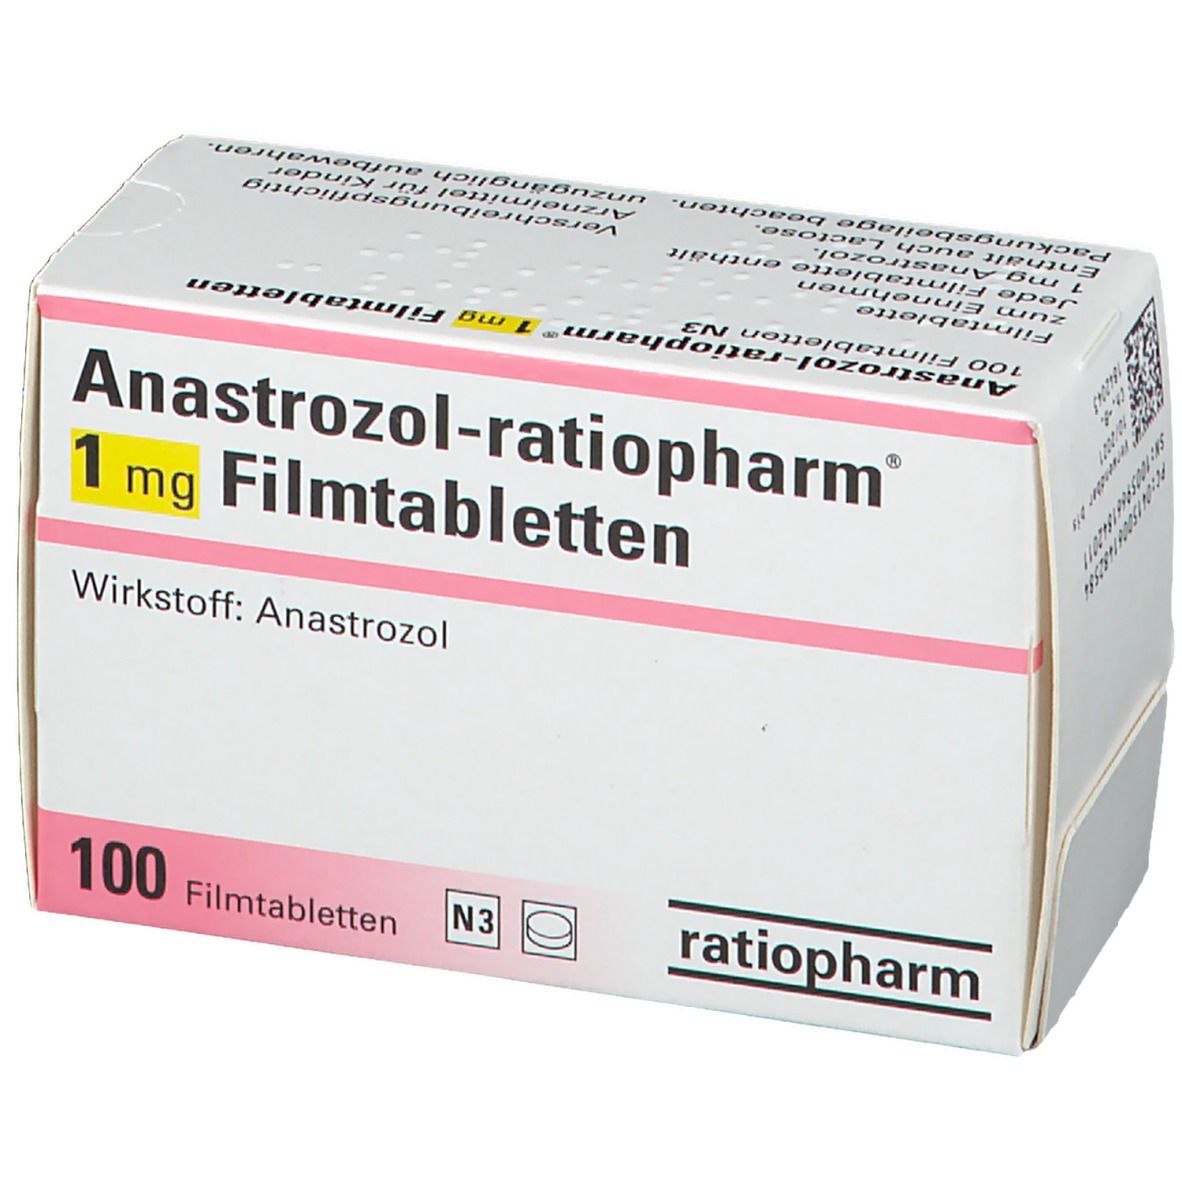 Anastrozol-ratiopharm® 1 mg